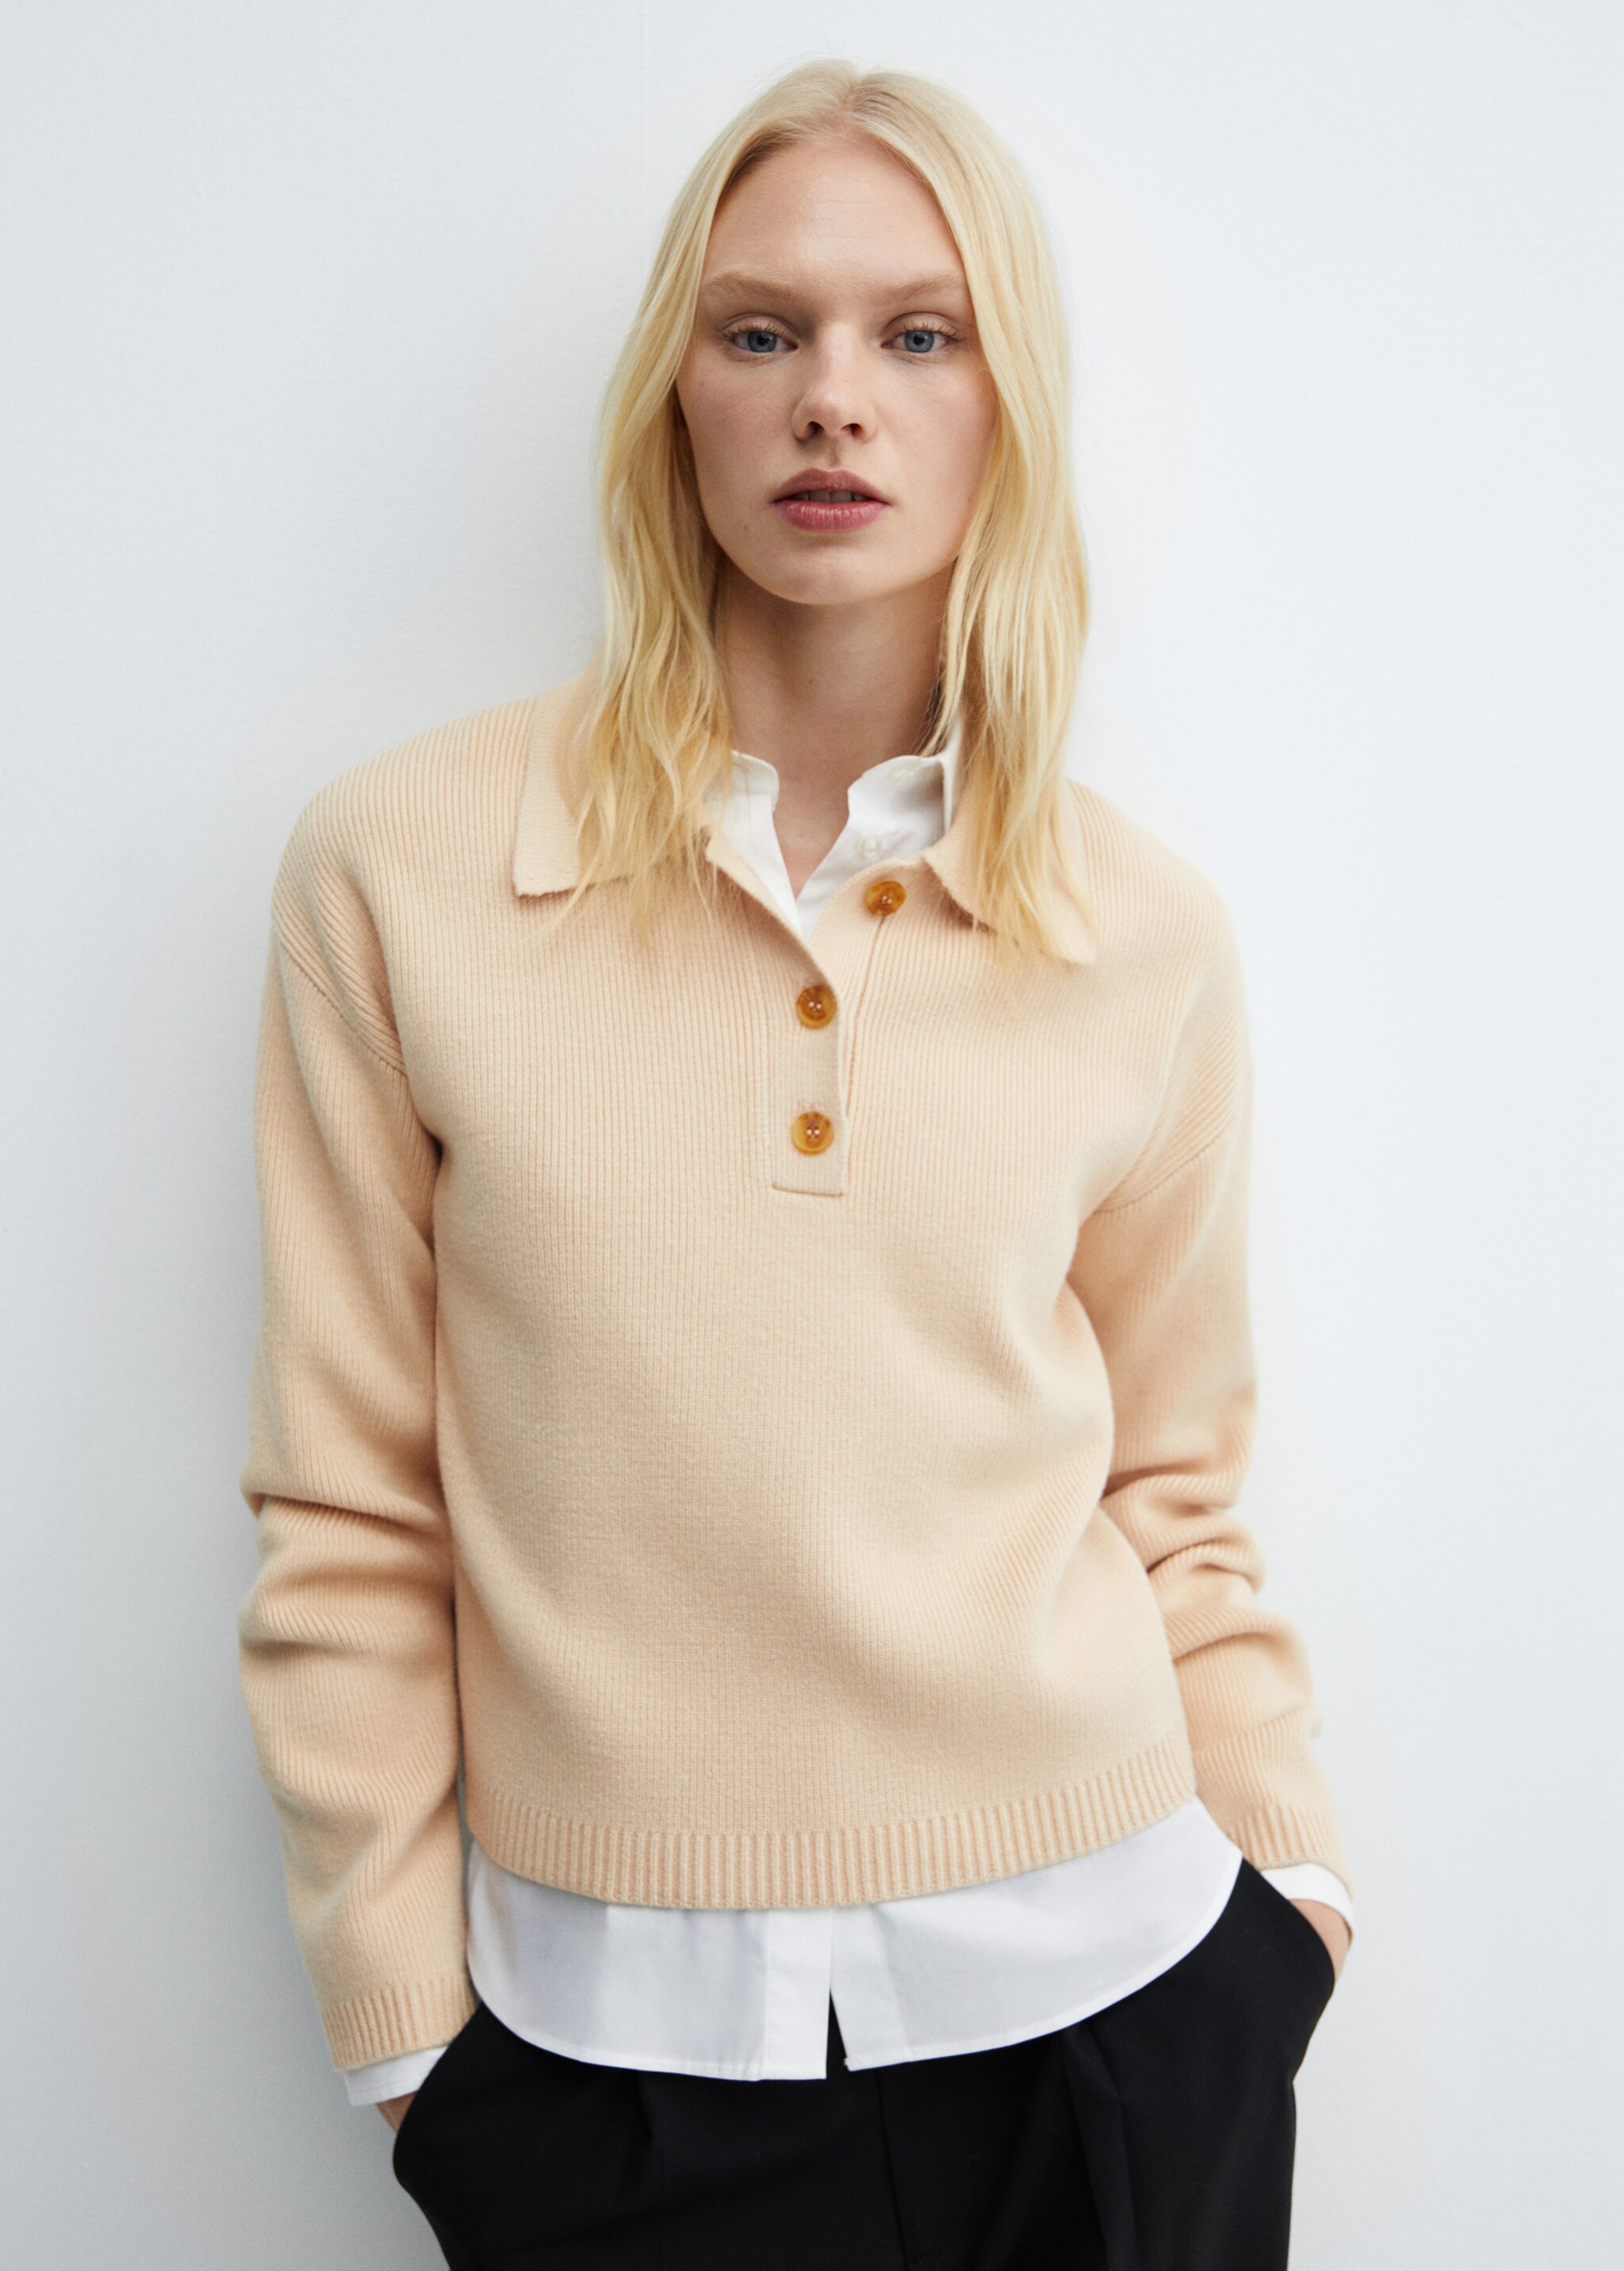 Buttoned collar knit sweater - Medium plane